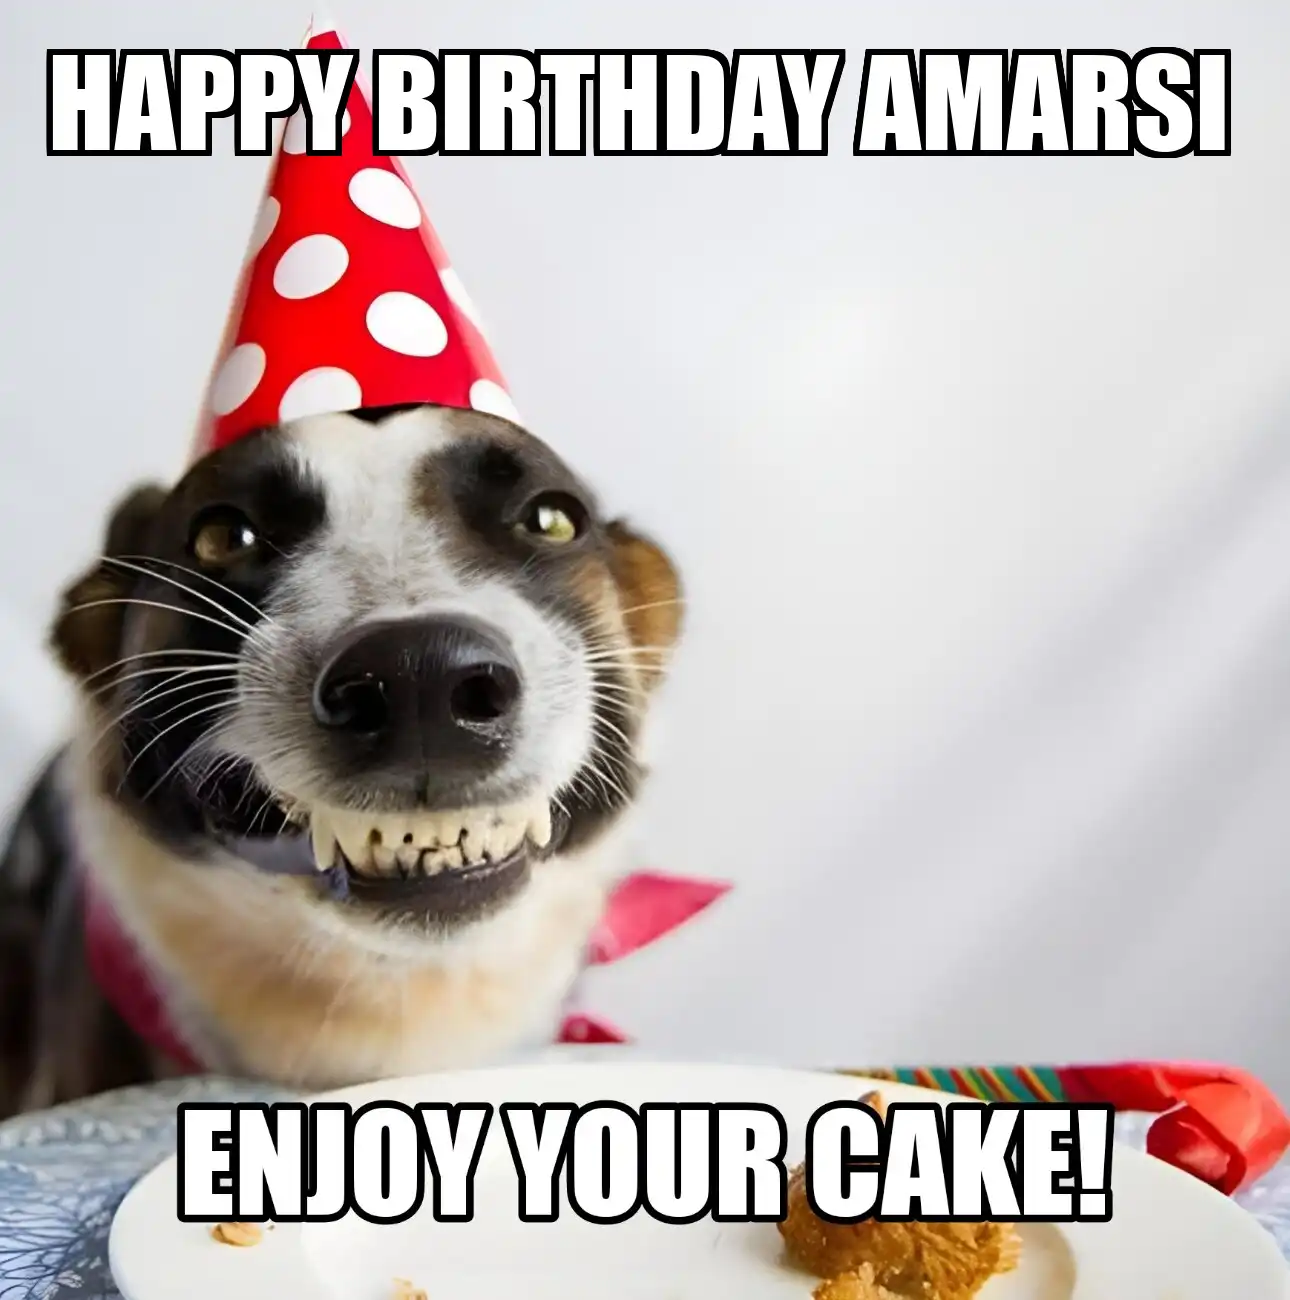 Happy Birthday Amarsi Enjoy Your Cake Dog Meme